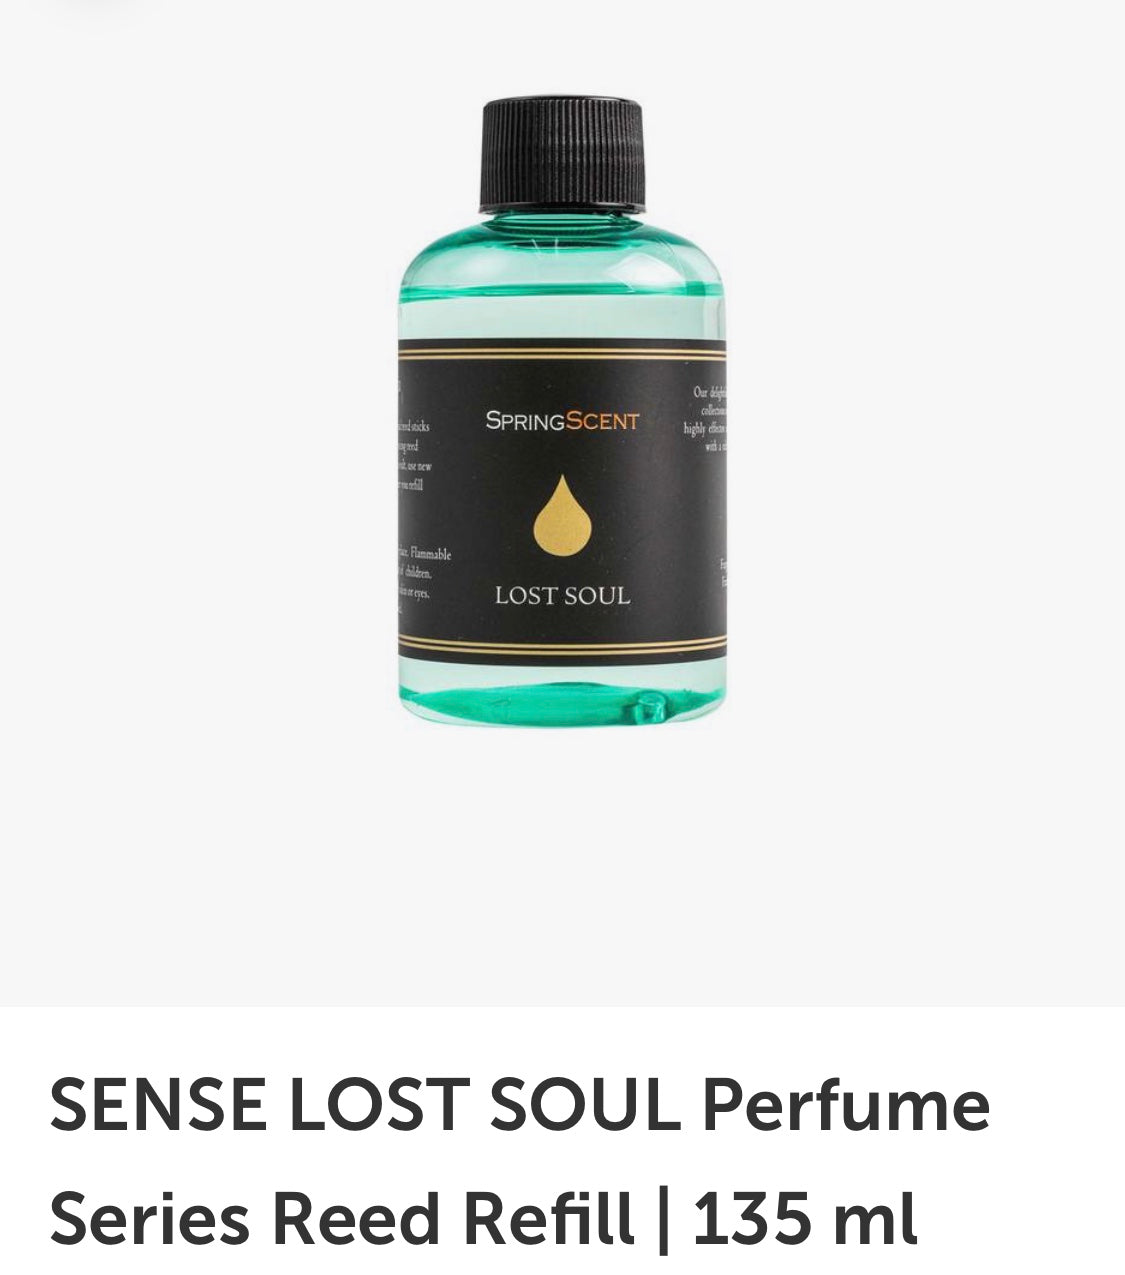 SENSE Perfume Series Reed Refill - The Sense House 